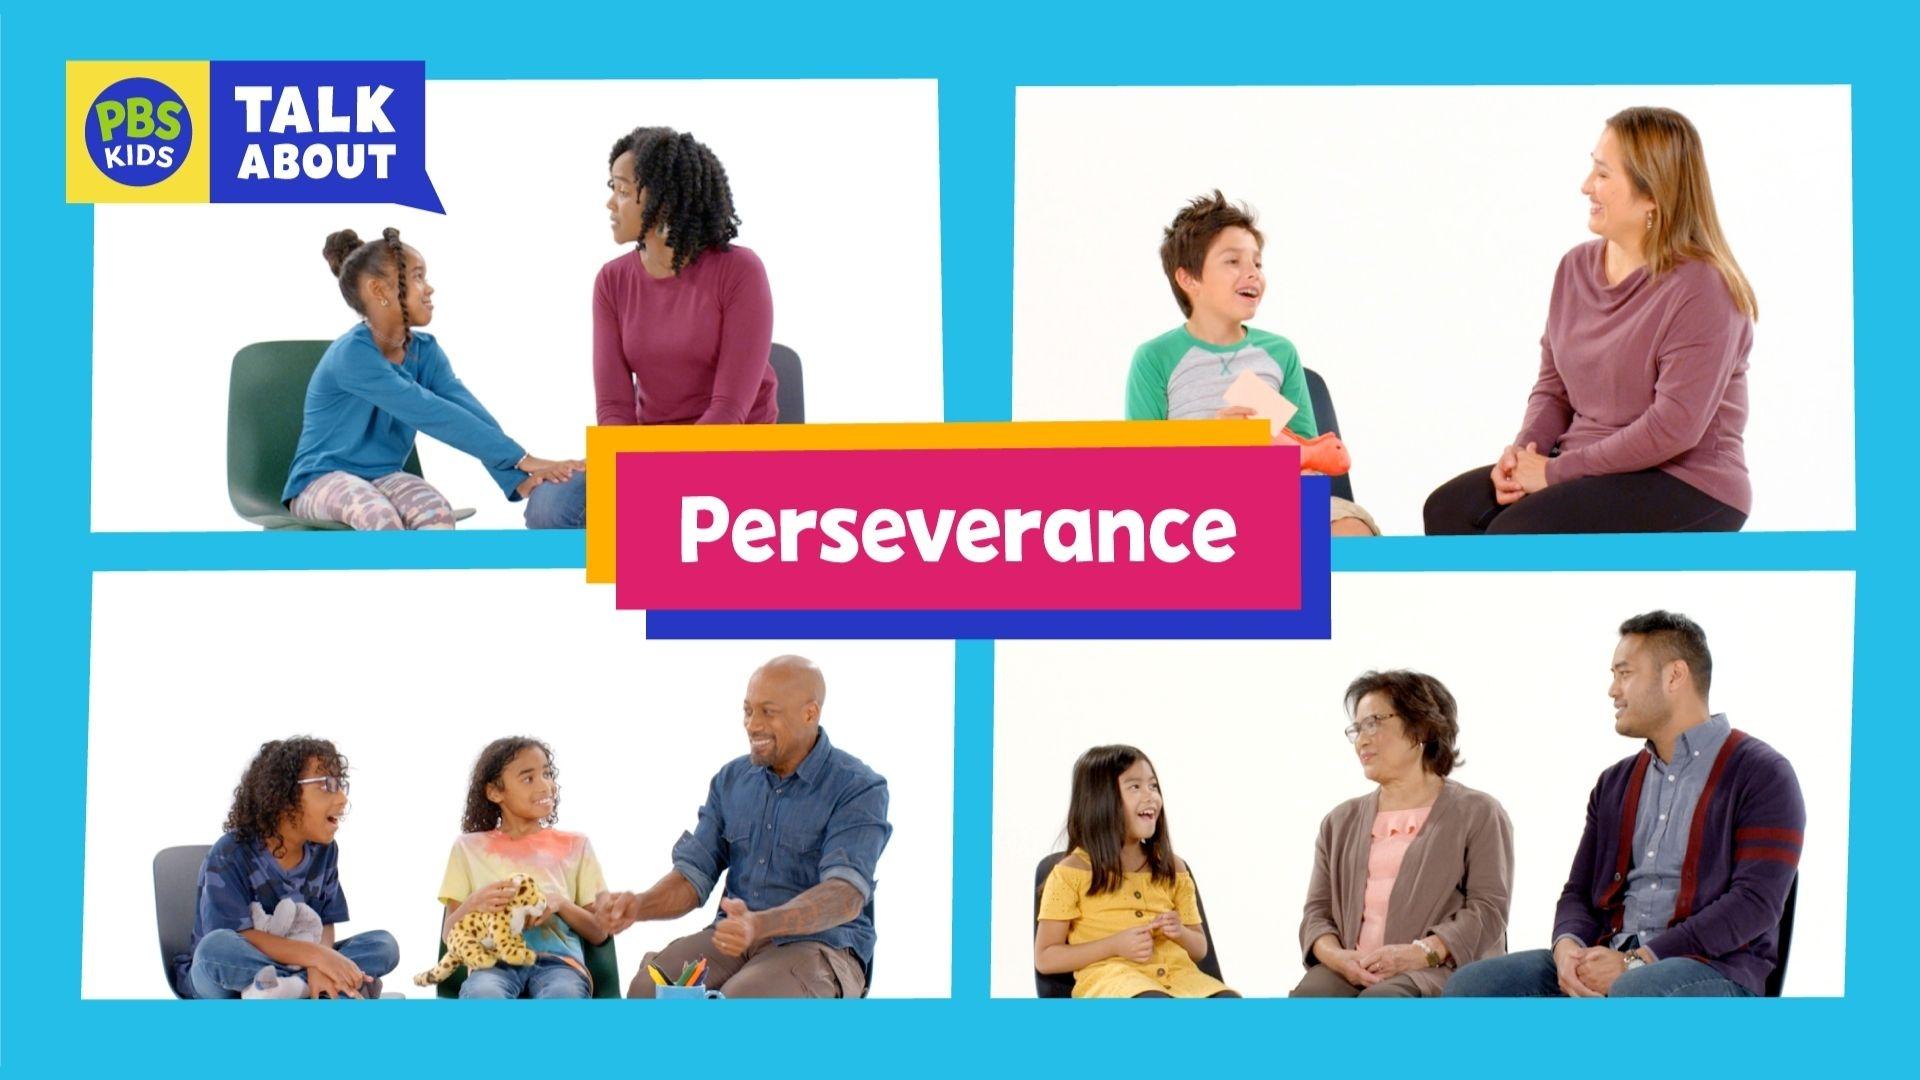 PBS KIDS Talk About Perserverance